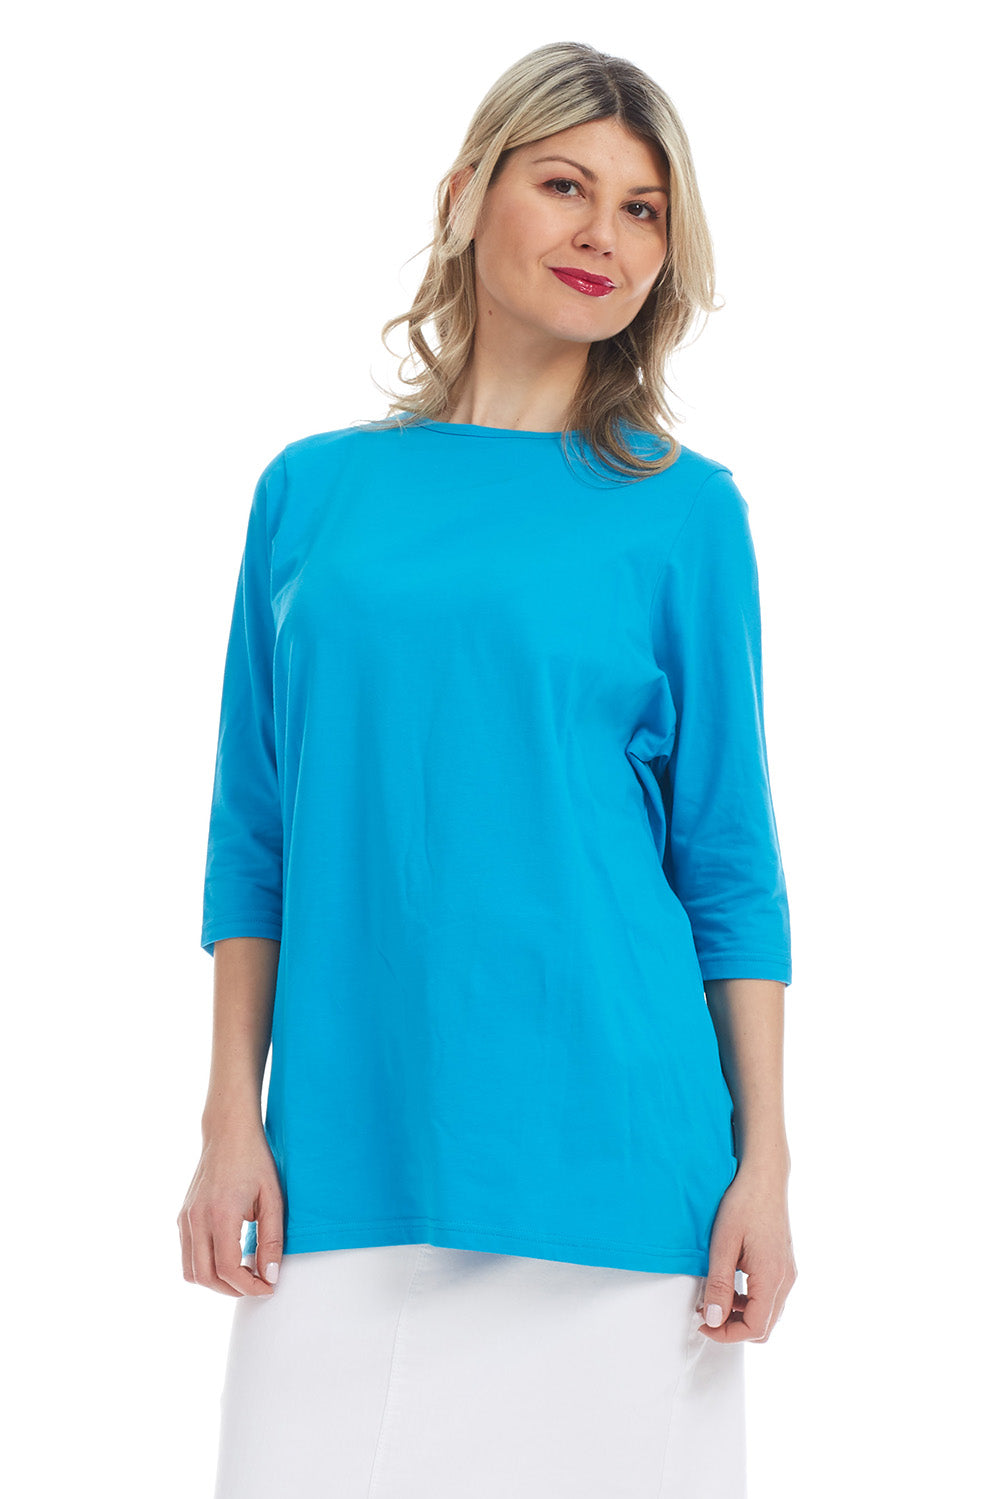 Plain blue 3/4 sleeve tunic t-shirt for women